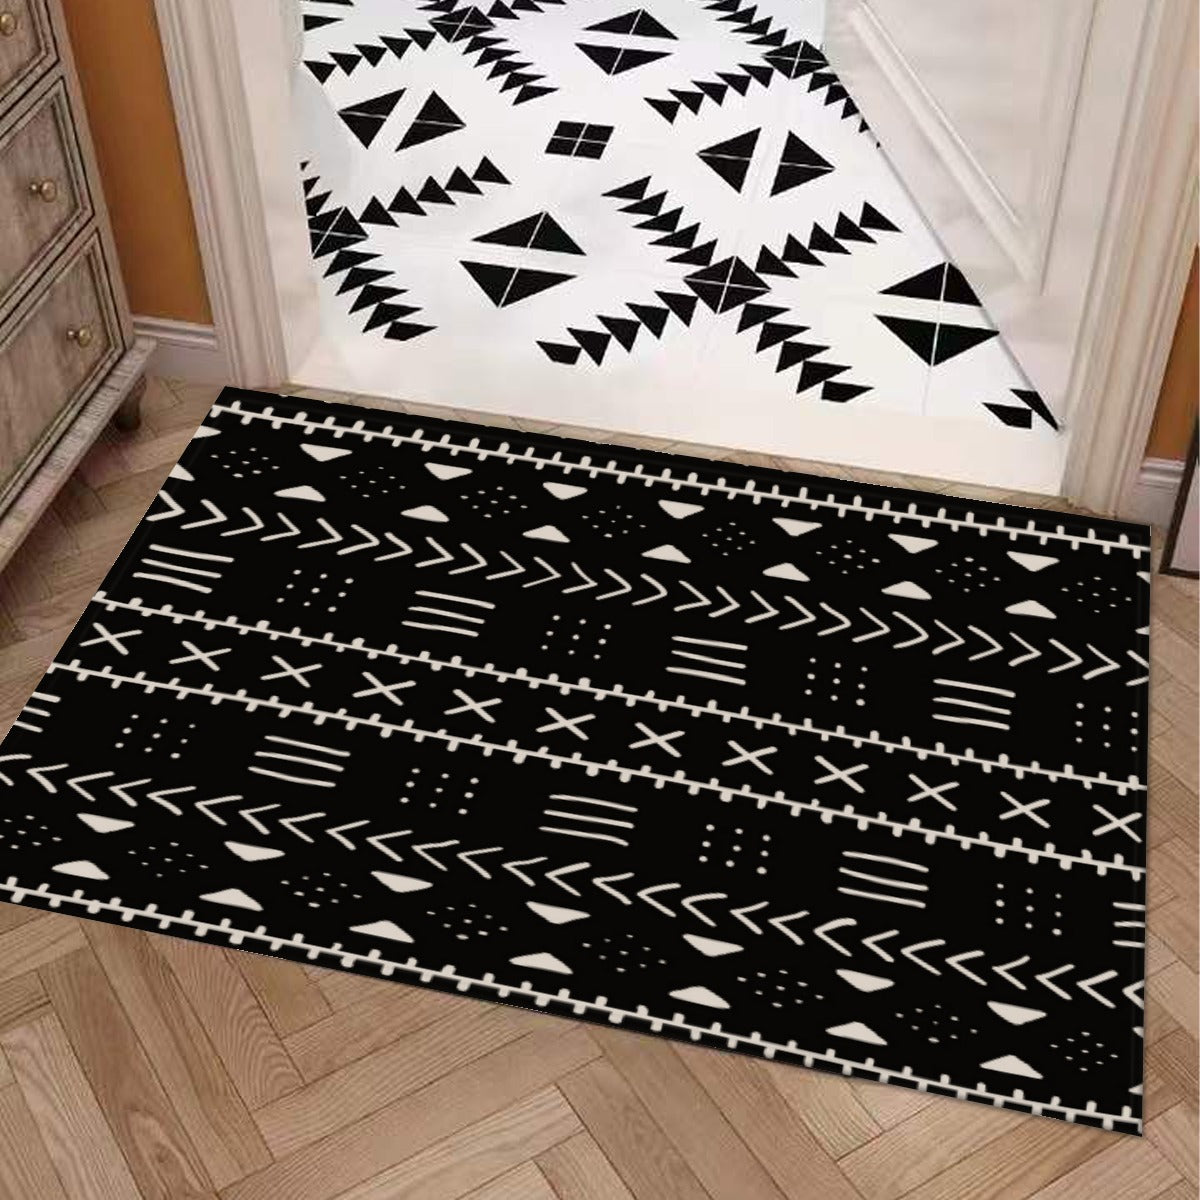 Black and White African Bathroom Rug Tribal Print - Bynelo